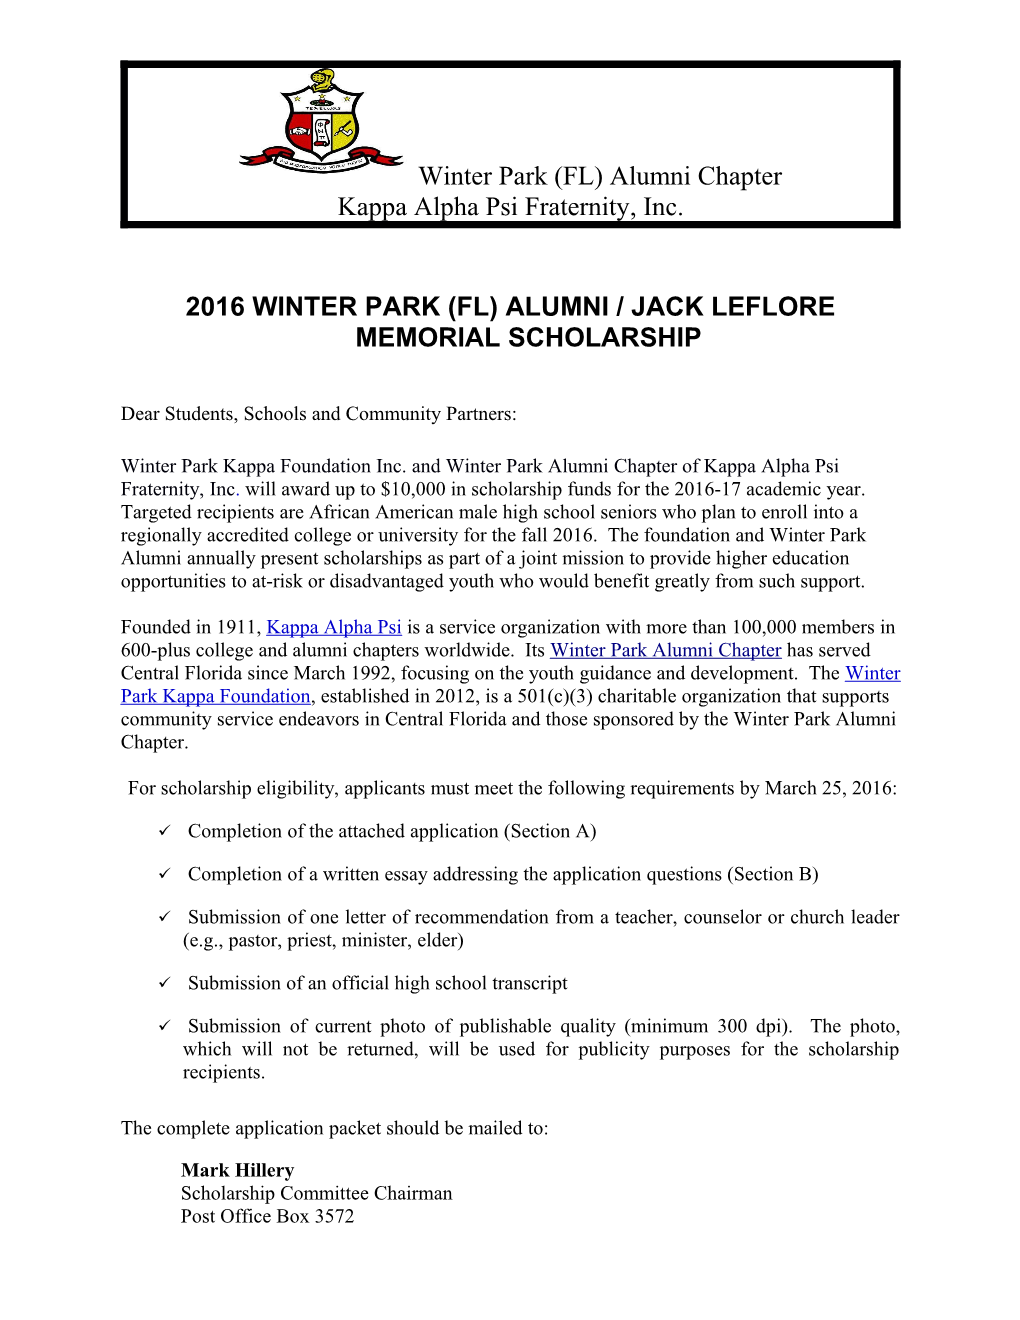 2016 Winter Park (Fl) Alumni / Jack Leflore Memorial Scholarship